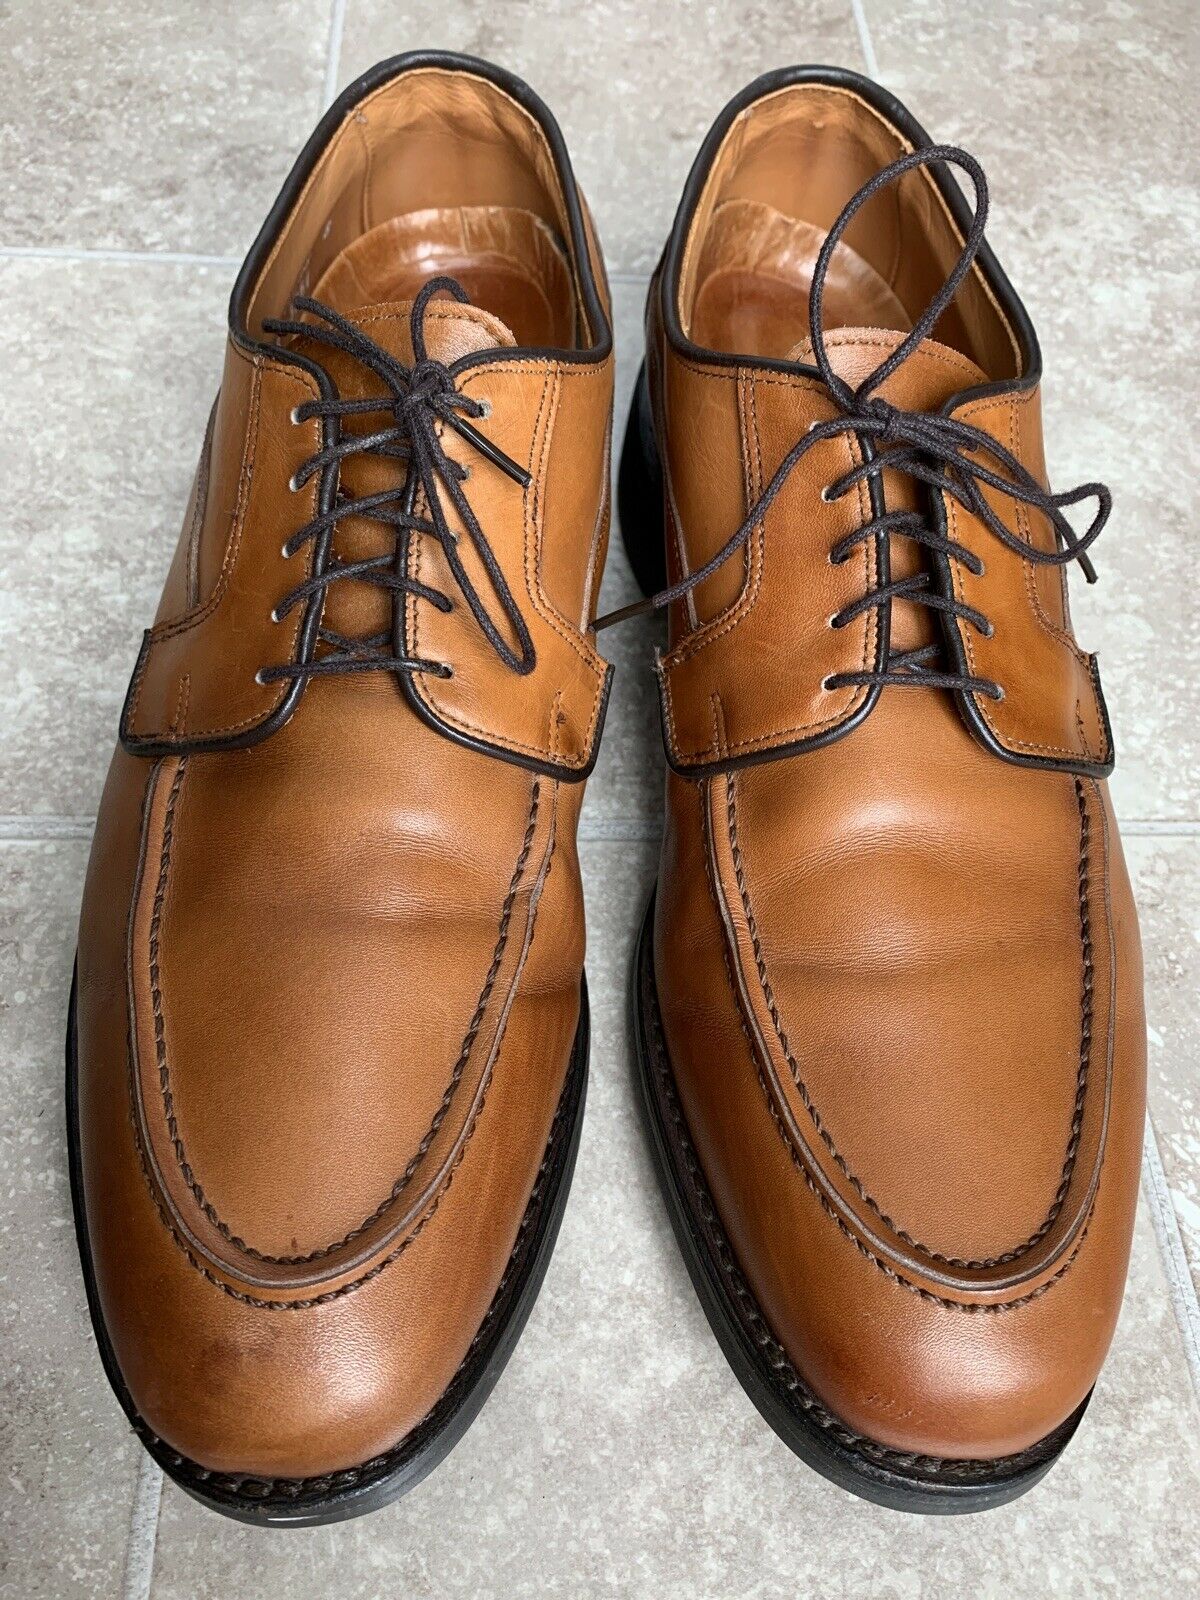 Allen Edmonds Comfort Orthotic Inserts Leather Oxford Dress Shoes Men’s Size 10C